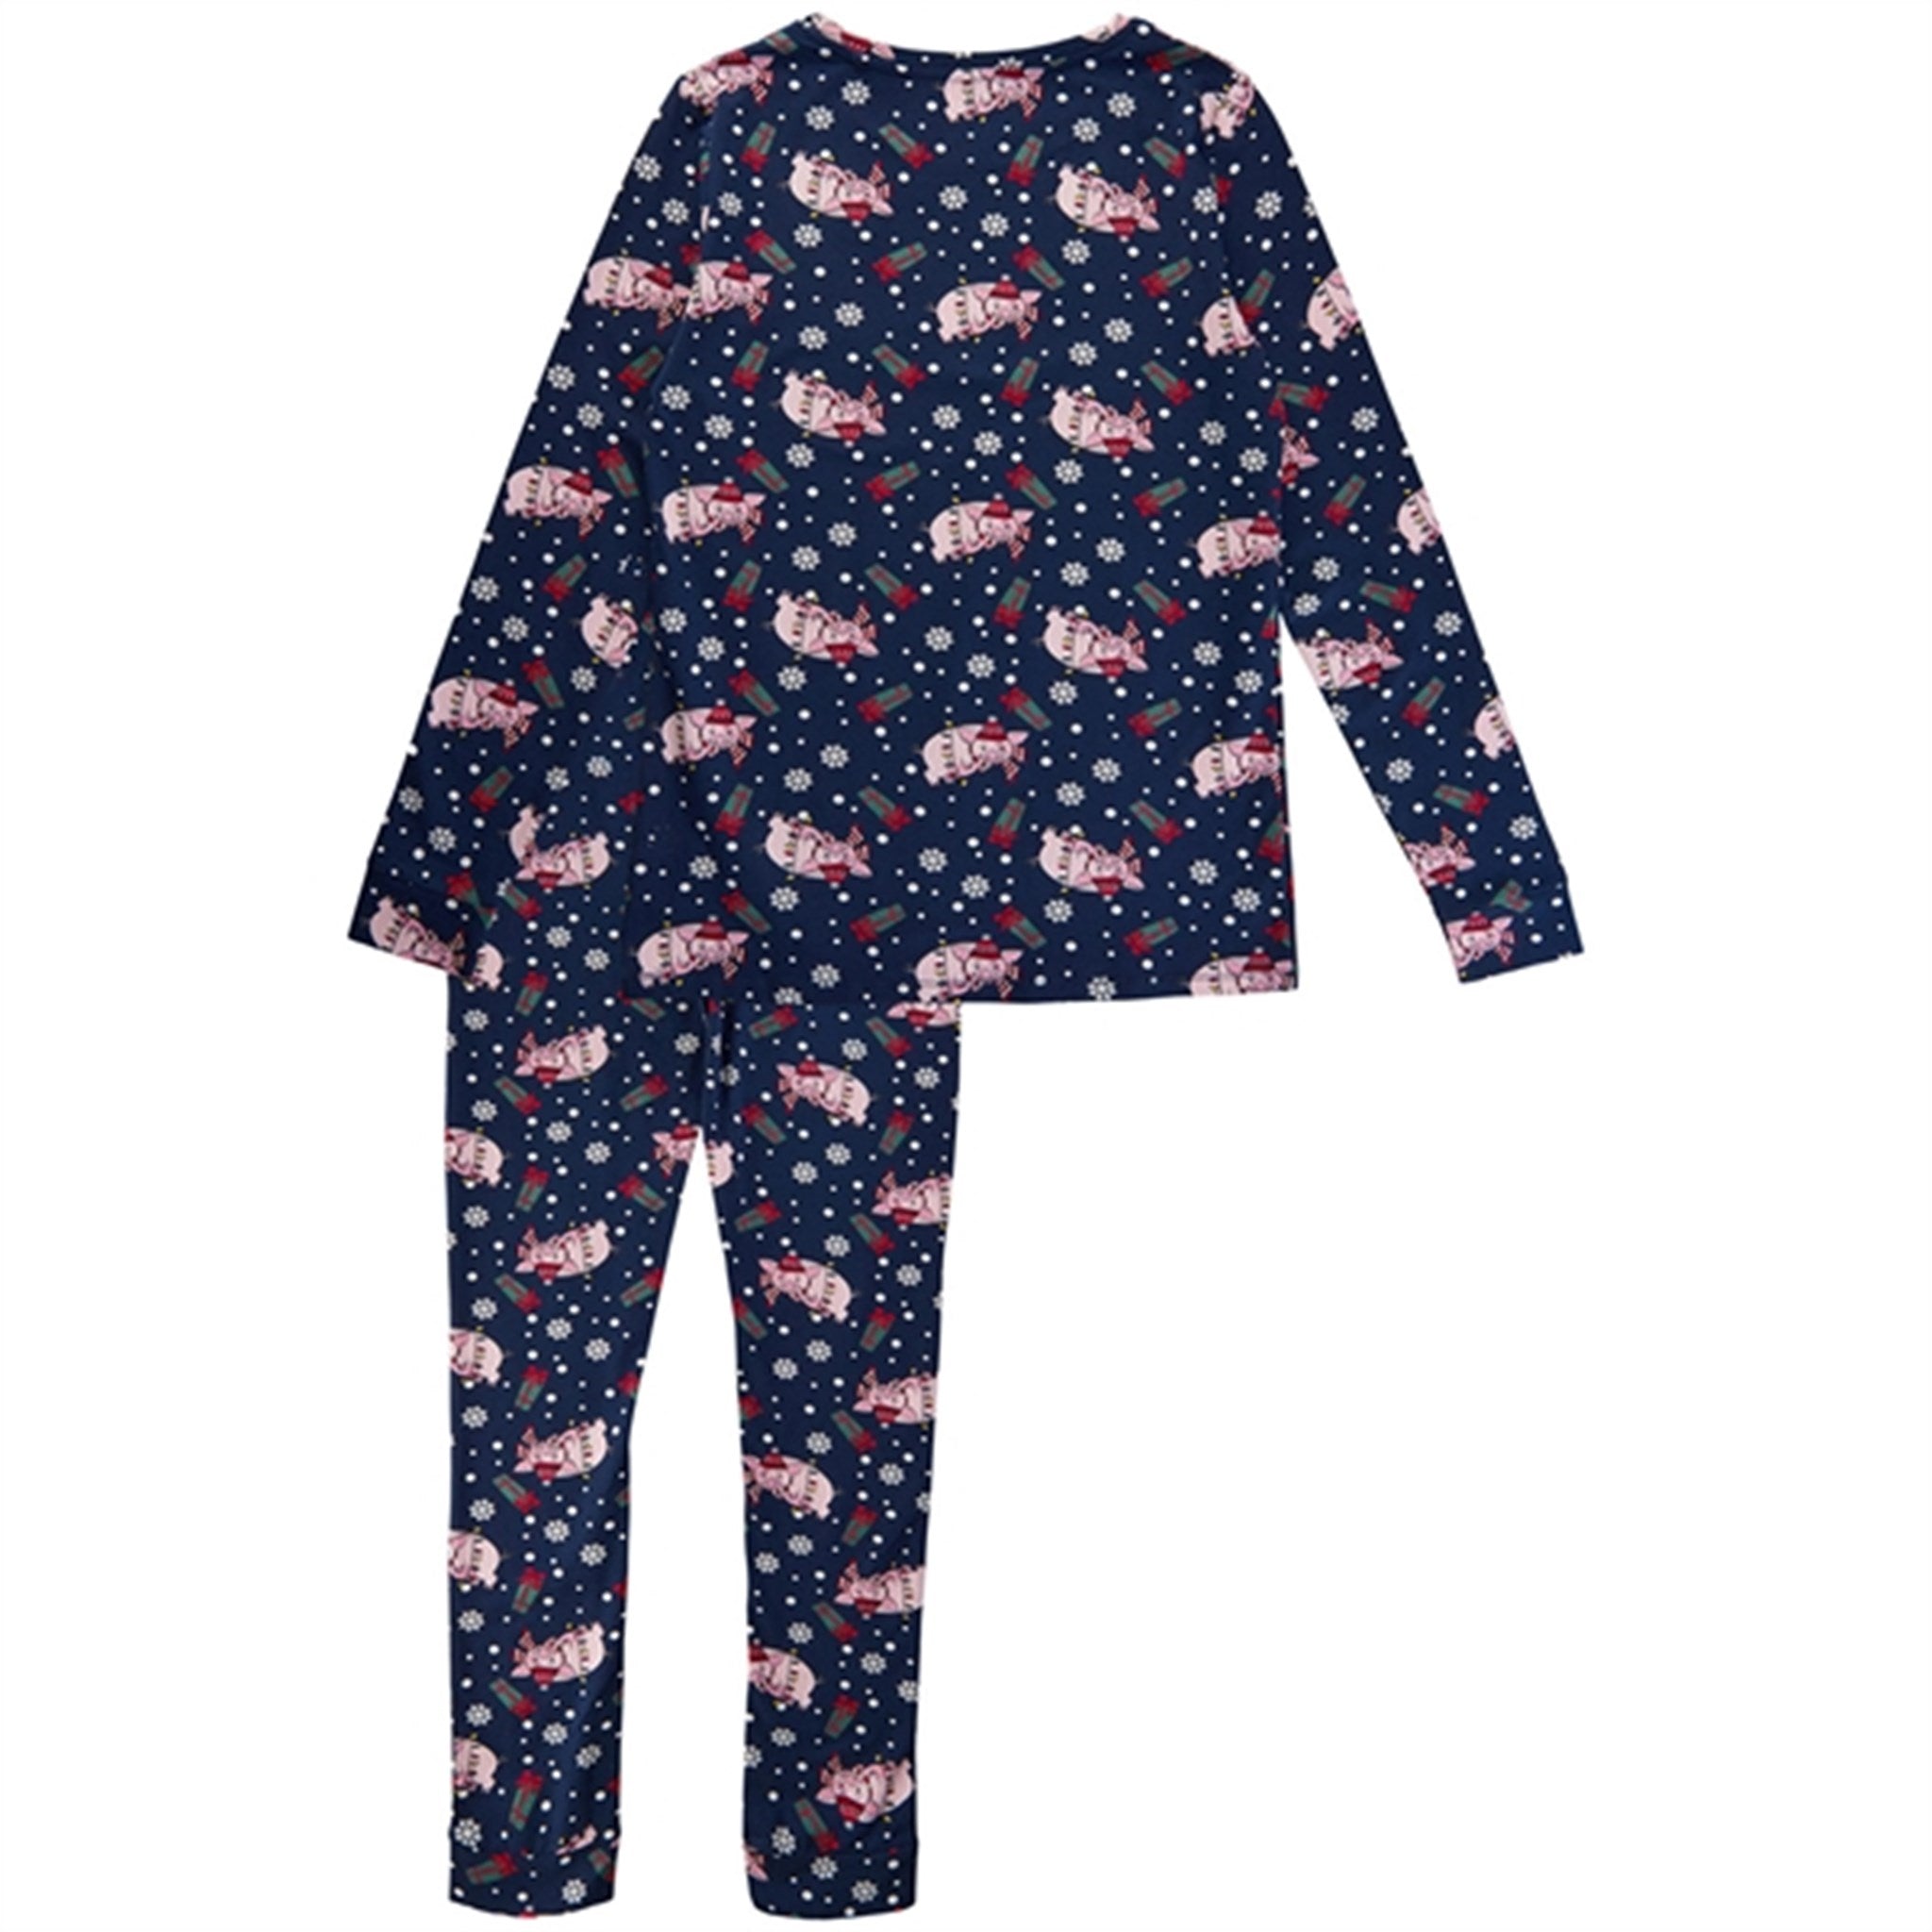 The New Navy Blazer Holiday Pyjamas Adult 3